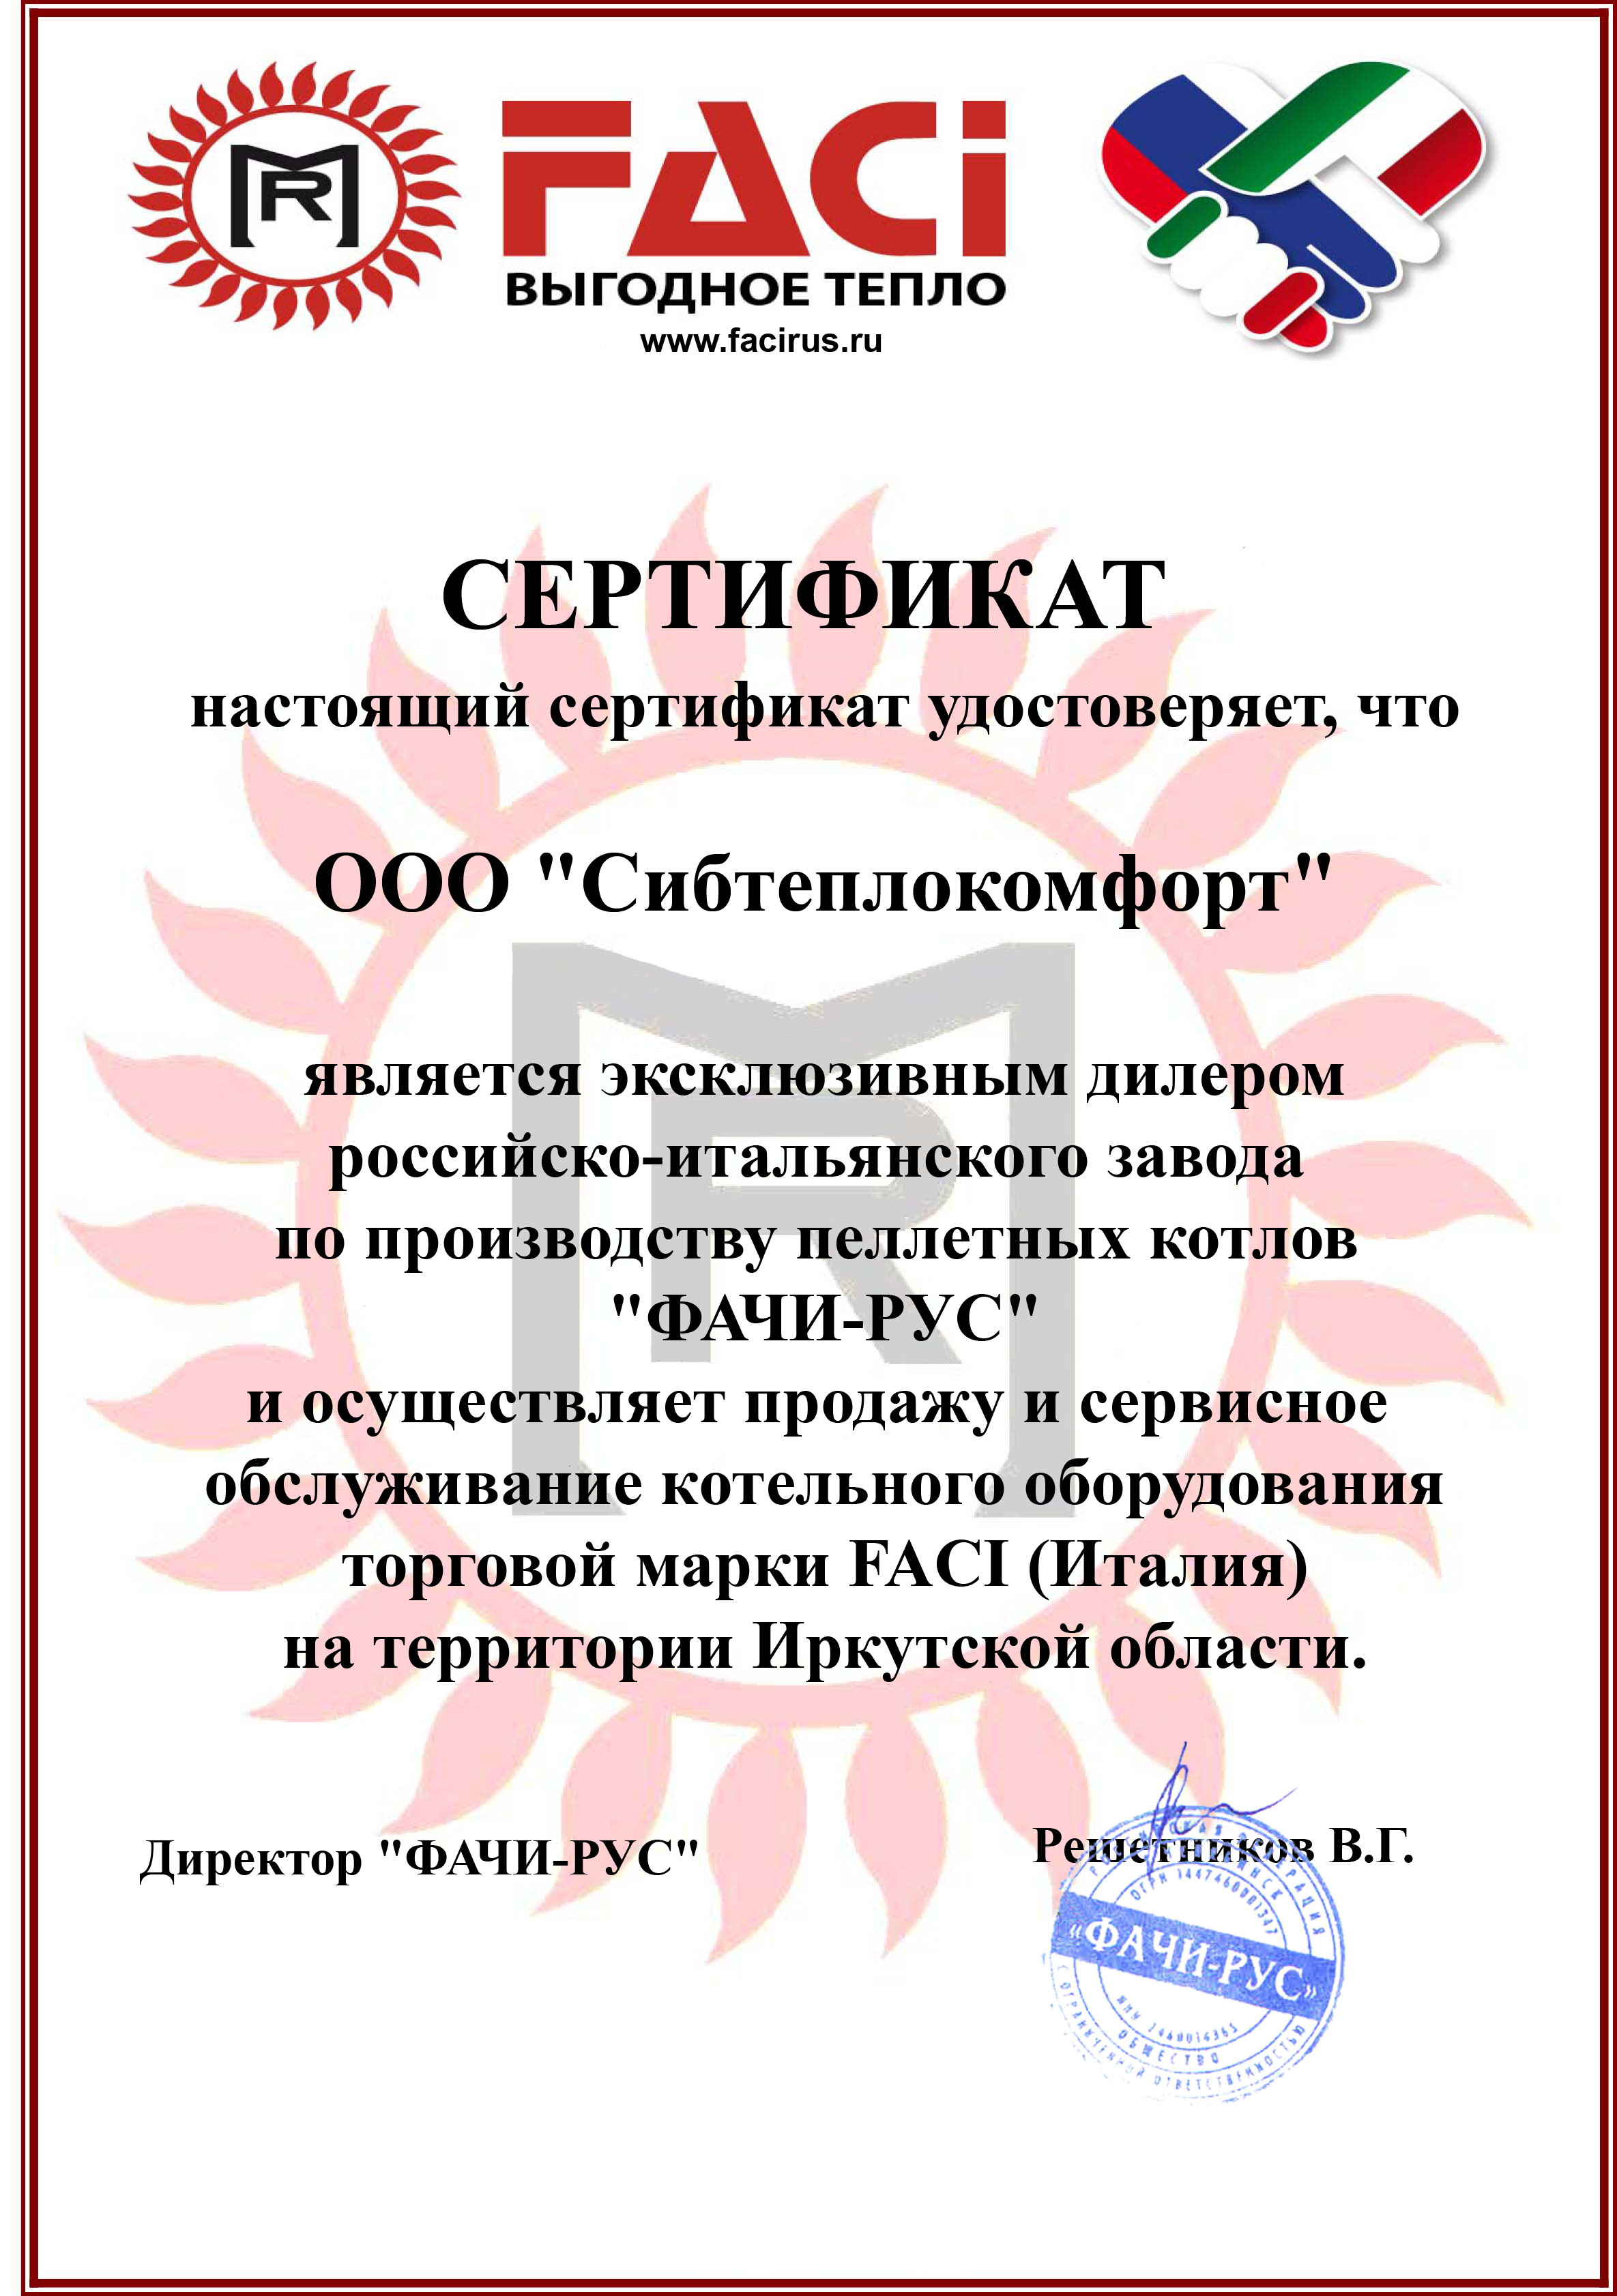 -- Сертификат СТК.jpg (jpg, 800 кб.)